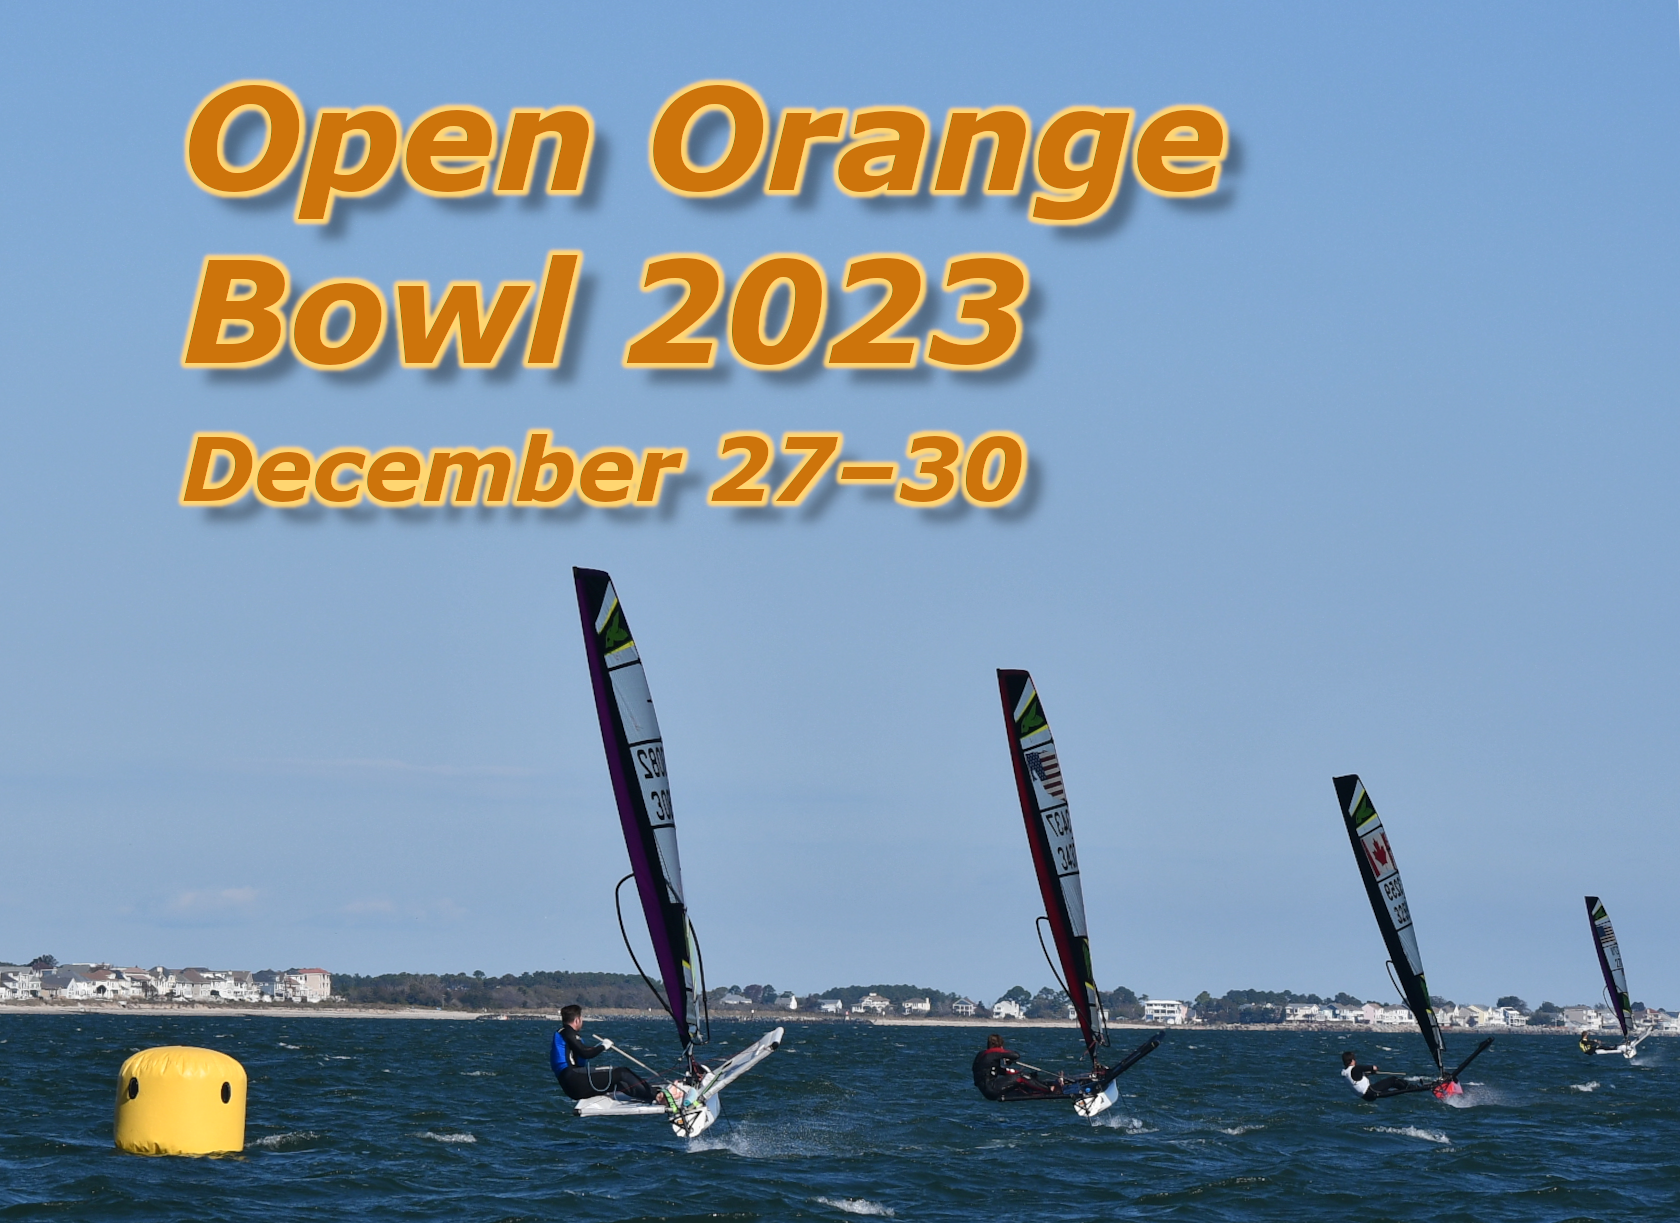 Open Orange Bowl 2023